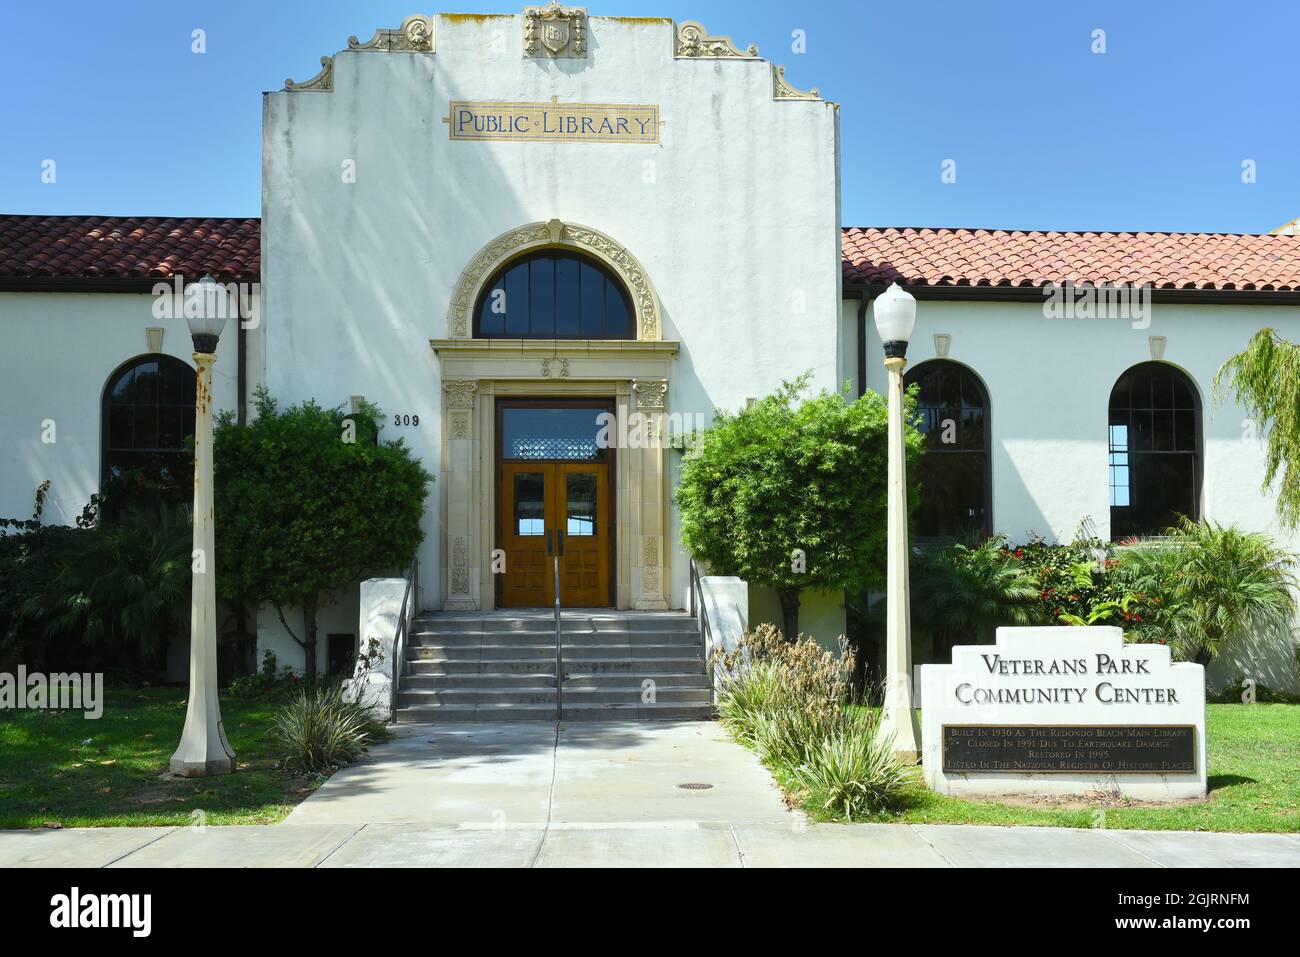 REDONDO BEACH, CALIFORNIA - 10 SEP 2021: The Veterans Park Community Center in the Old Library Building. Stockfoto